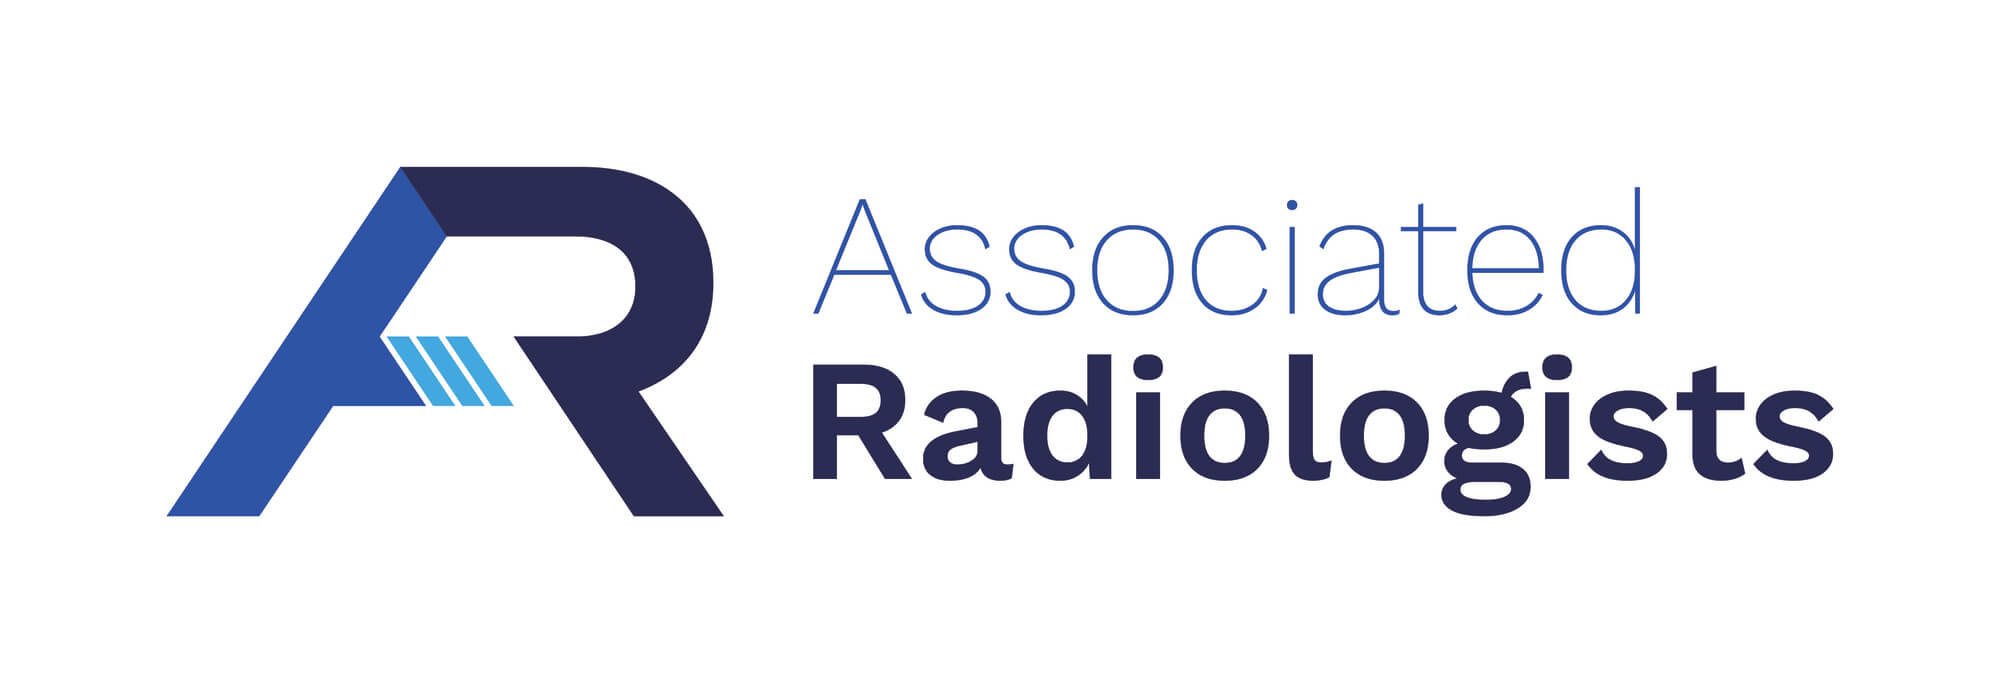 Business logo designed for Associated Radiologists in Saskatoon